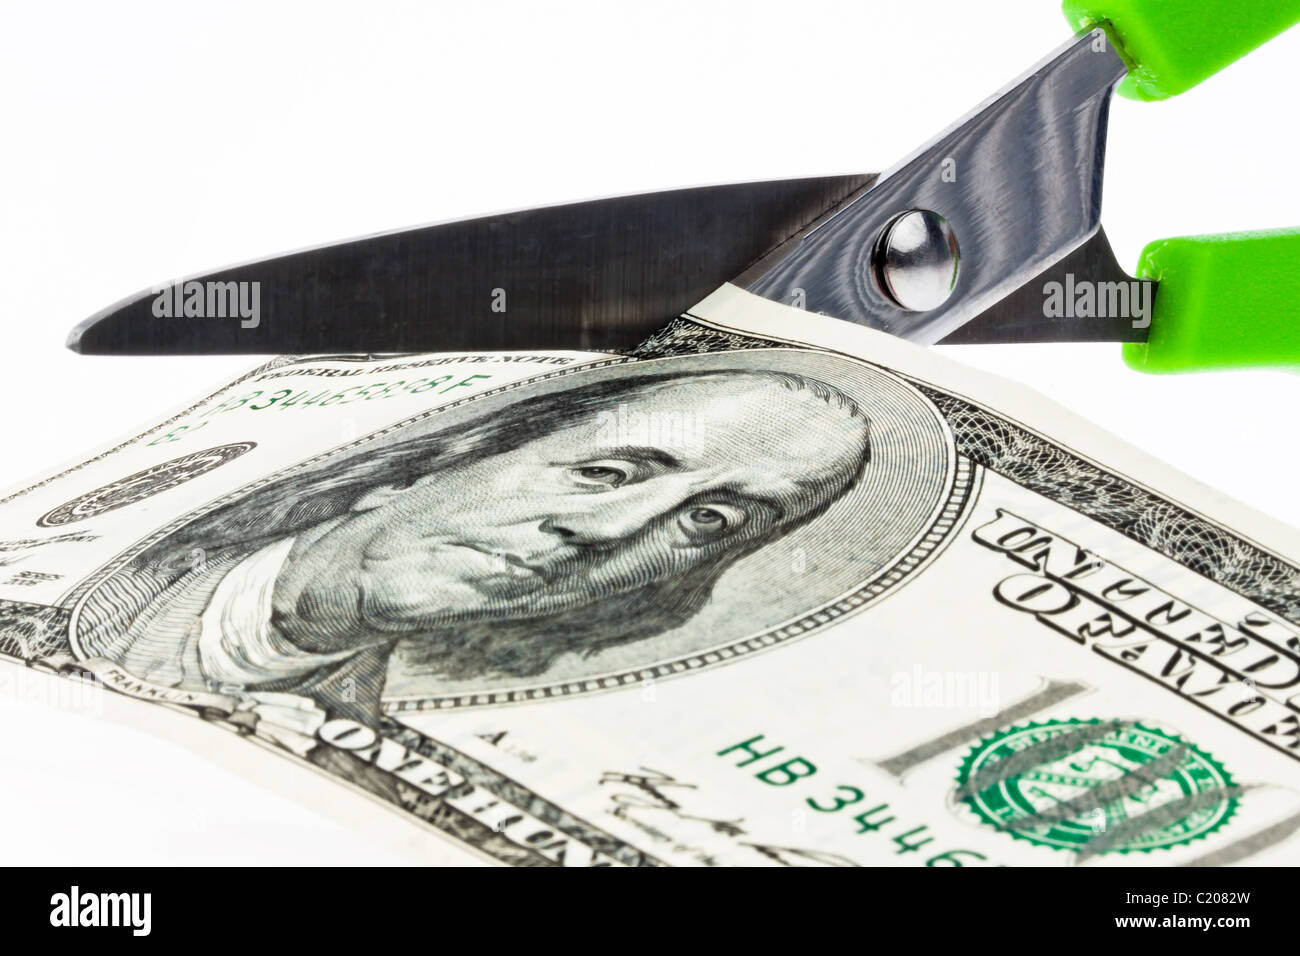 Dollar money bills and scissors Stock Photo